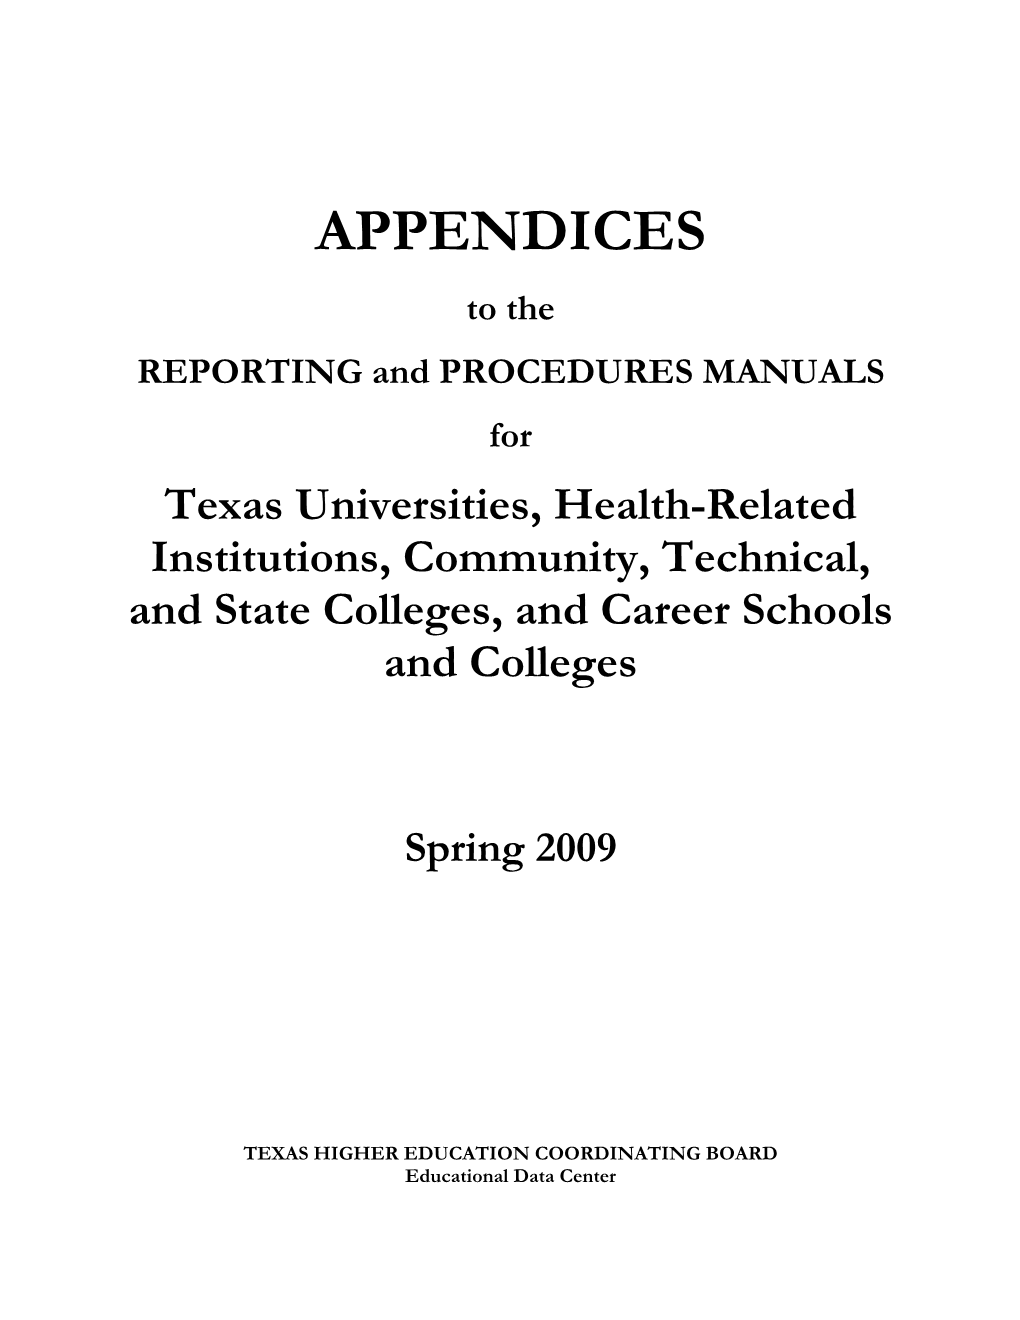 THECB Appendices 2009